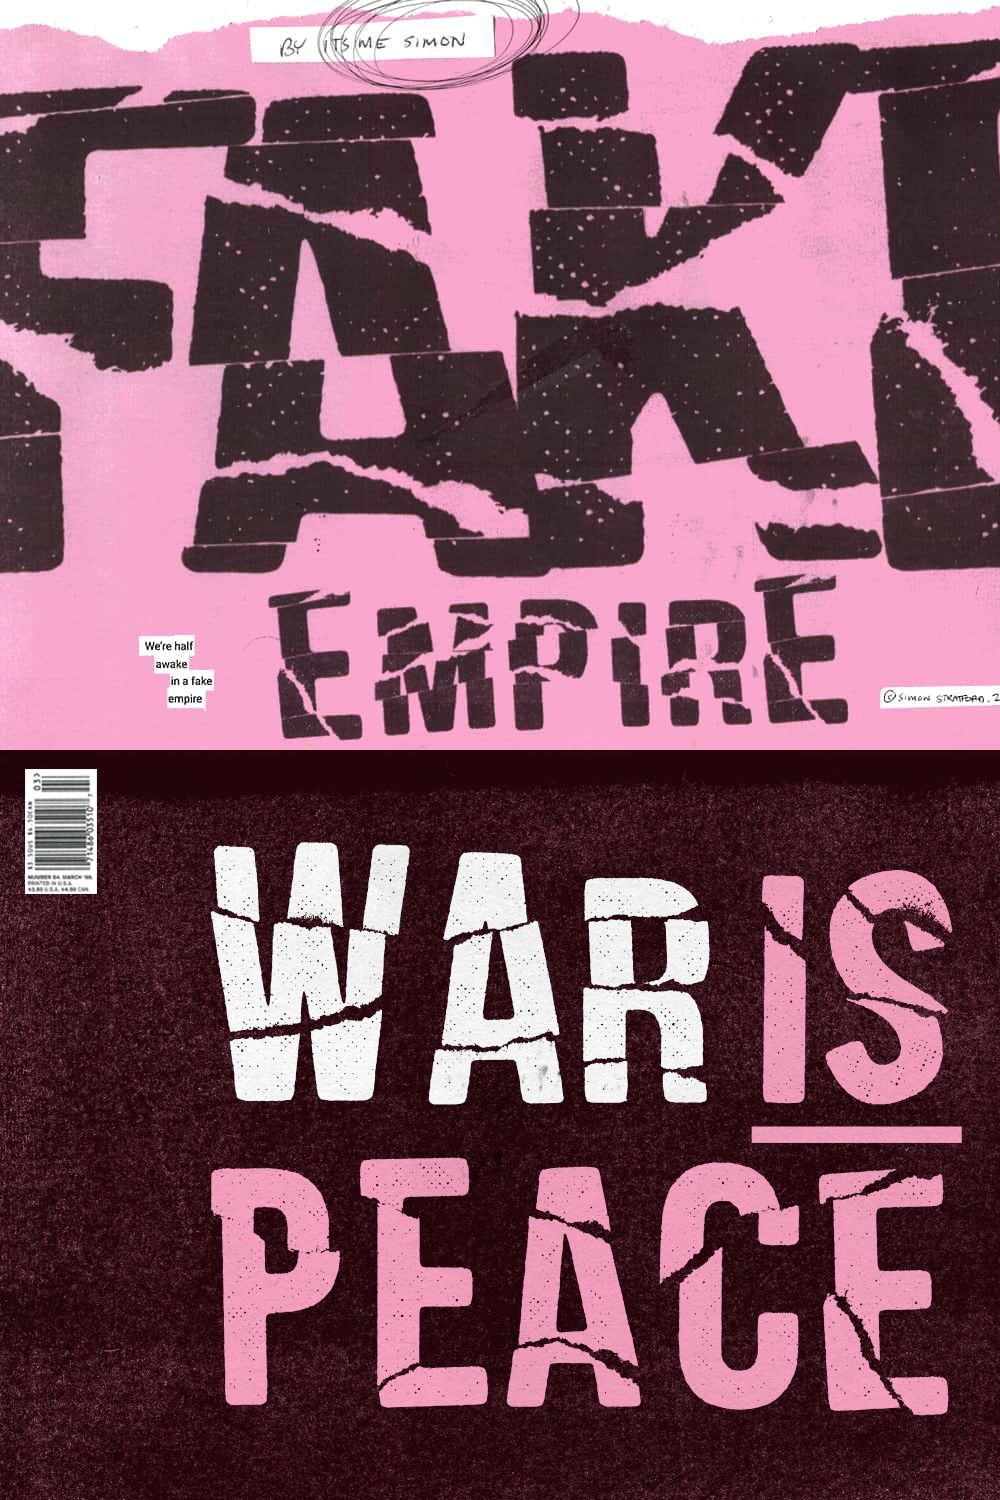 Fake Empire Display font sans serif pinterest preview image.